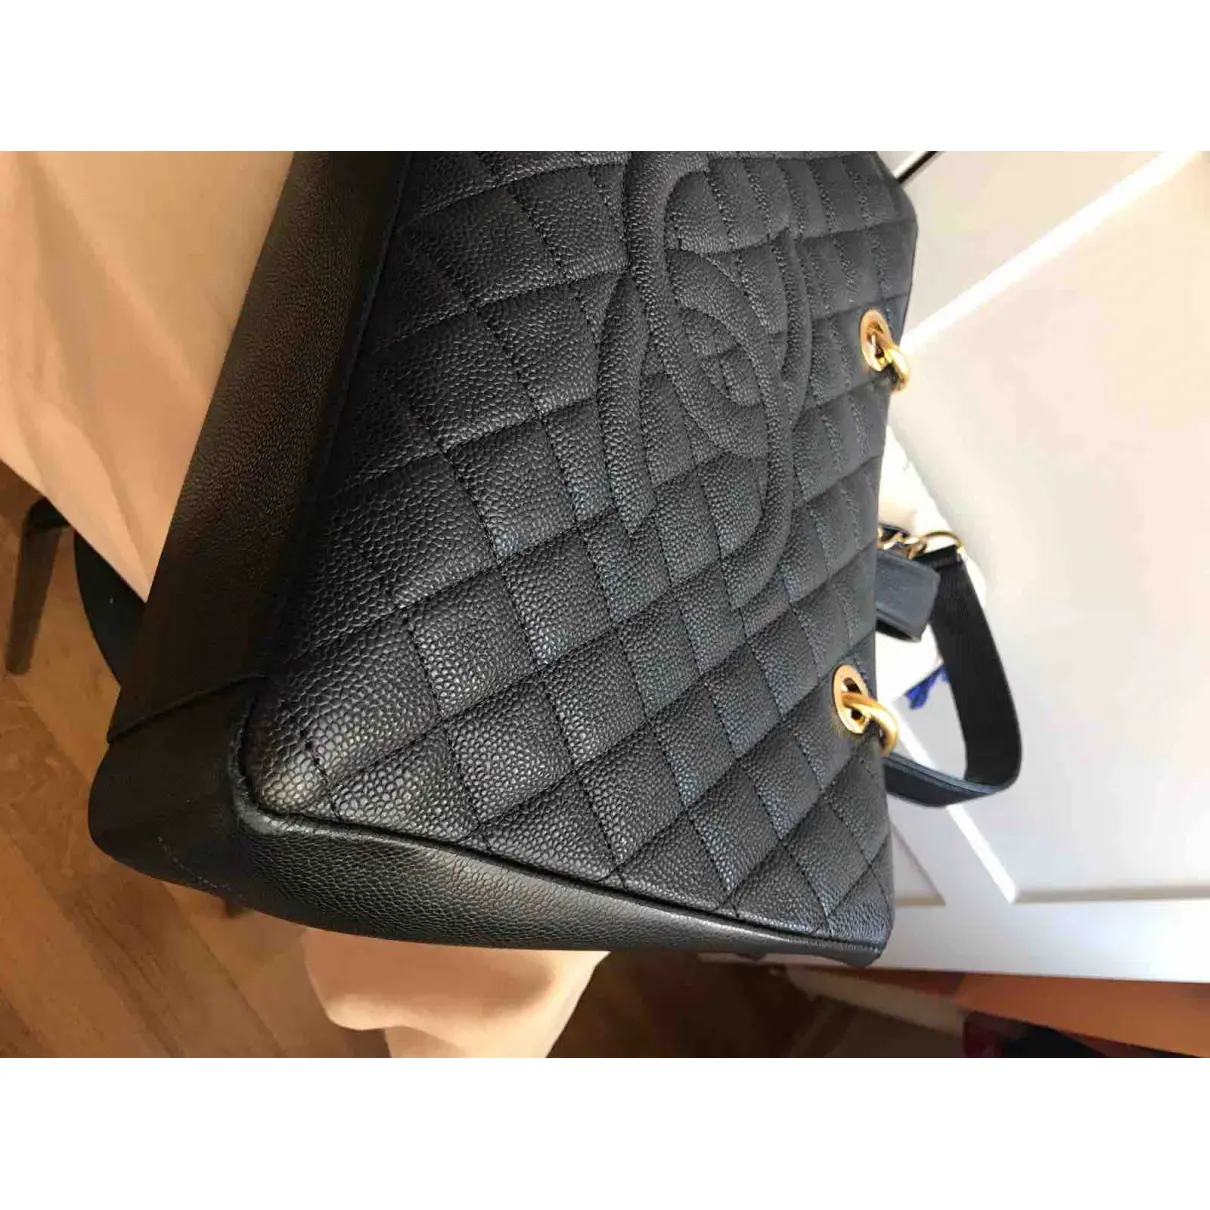 Buy Chanel Grand shopping leather handbag online